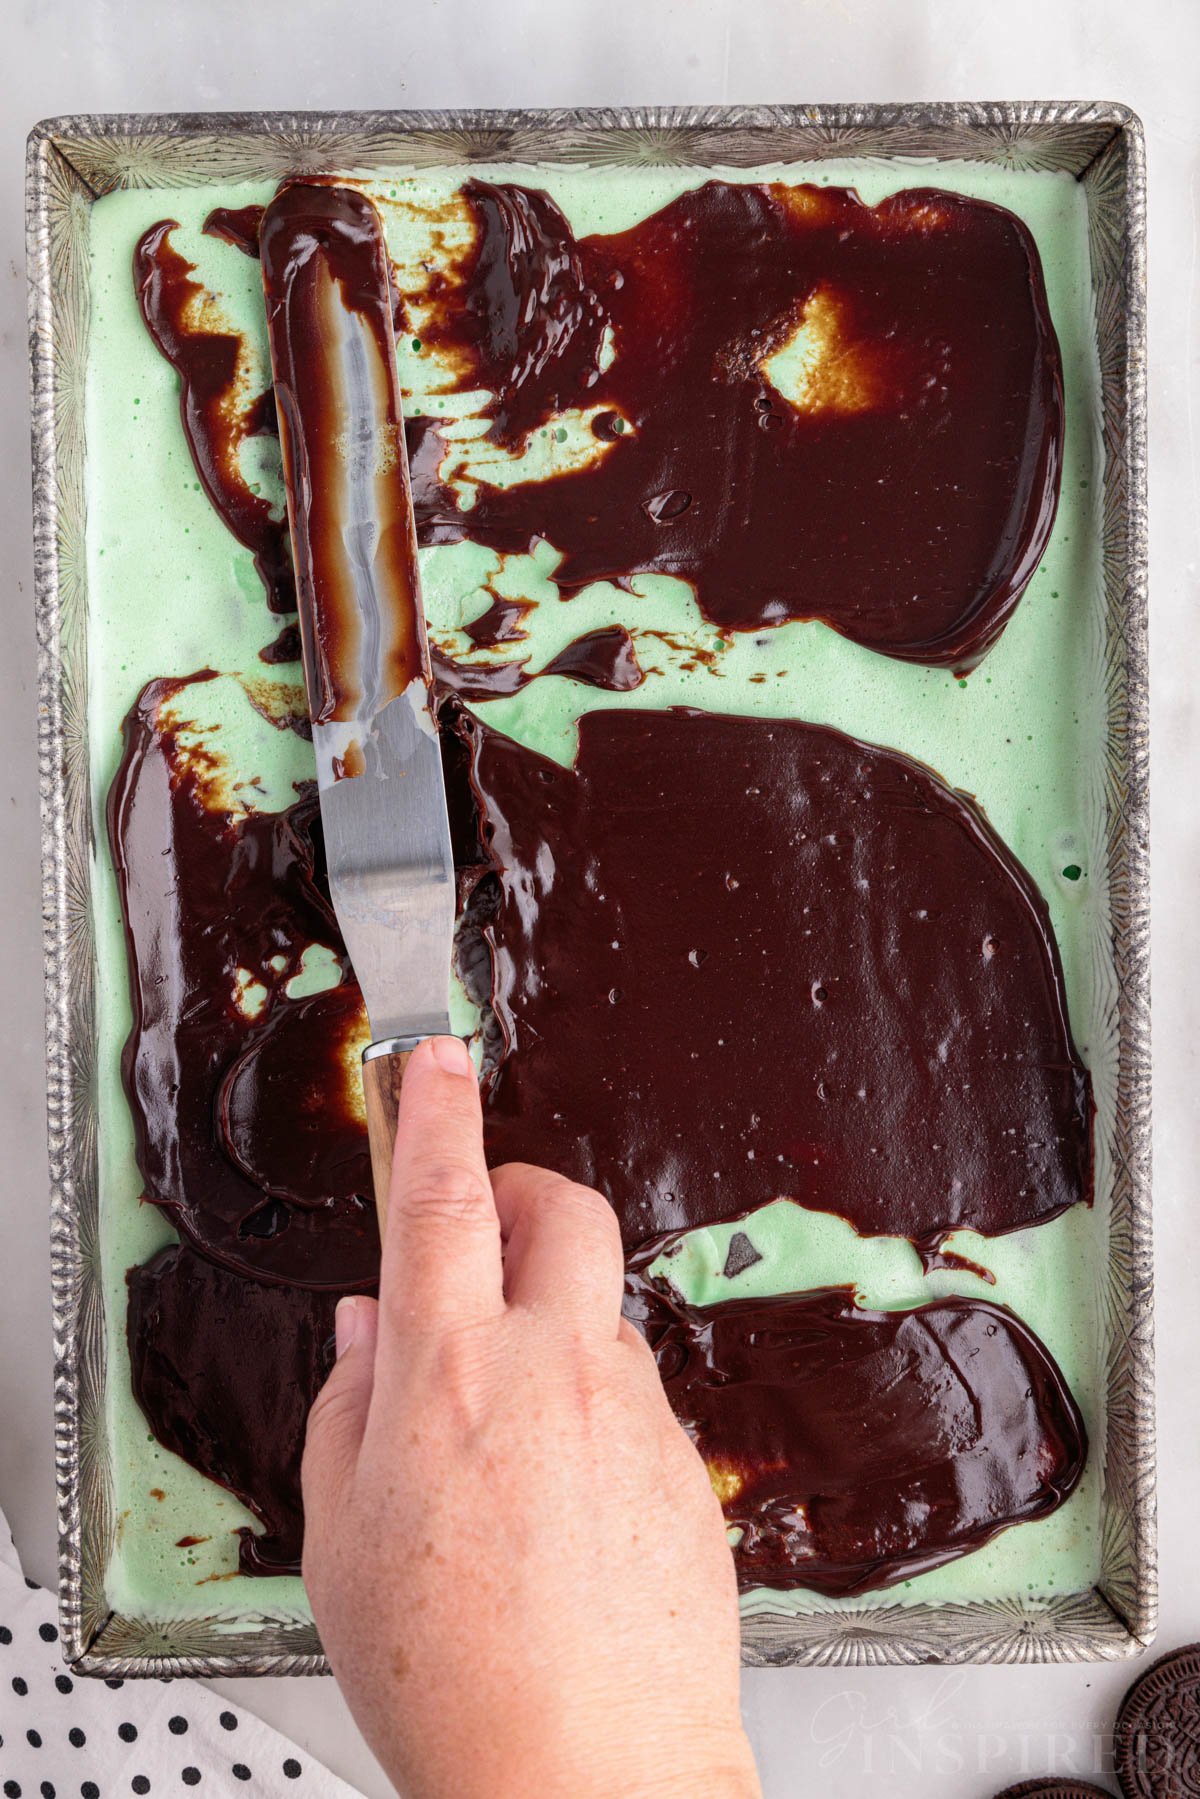 Hot fudge spread onto ice cream layer.